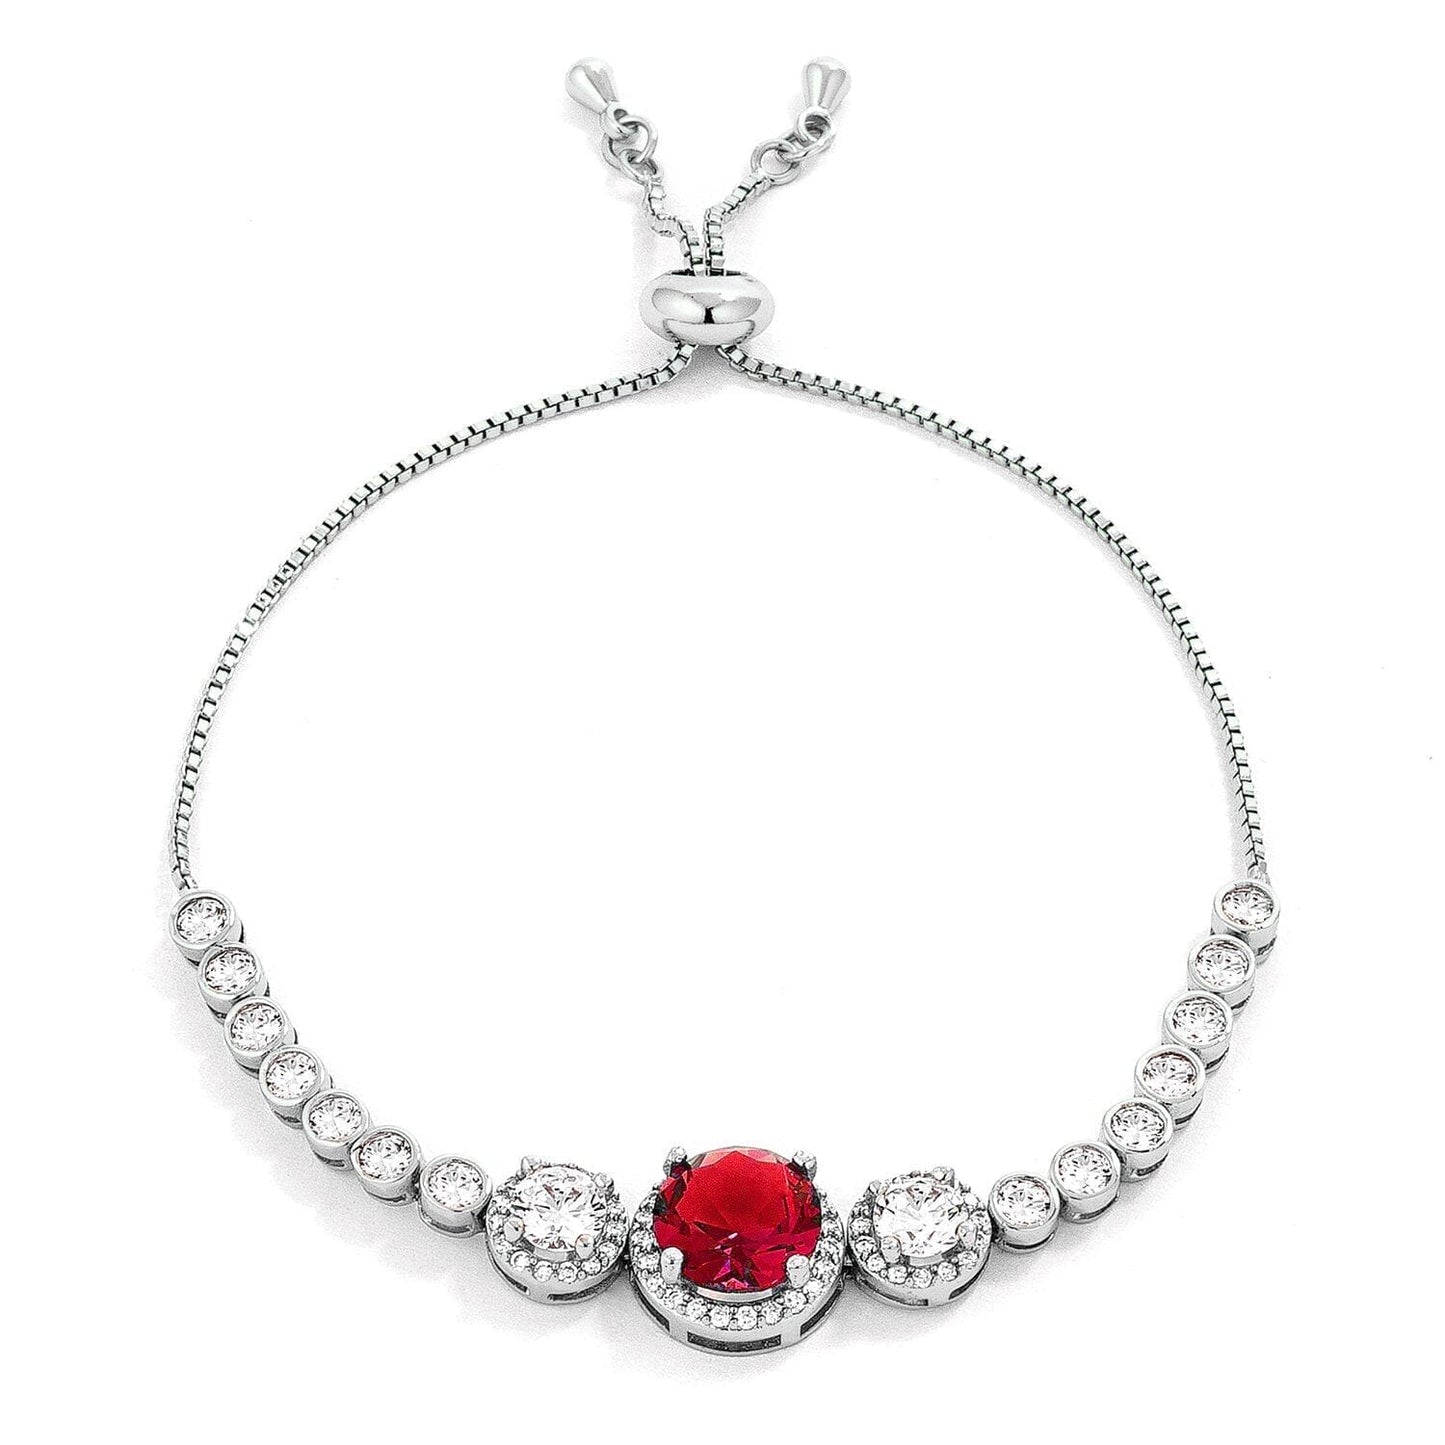 Ruby Red and Clear Graduated Cubic Zirconia Bolo Style Tennis Bracelet Bracelets Das Juwel 